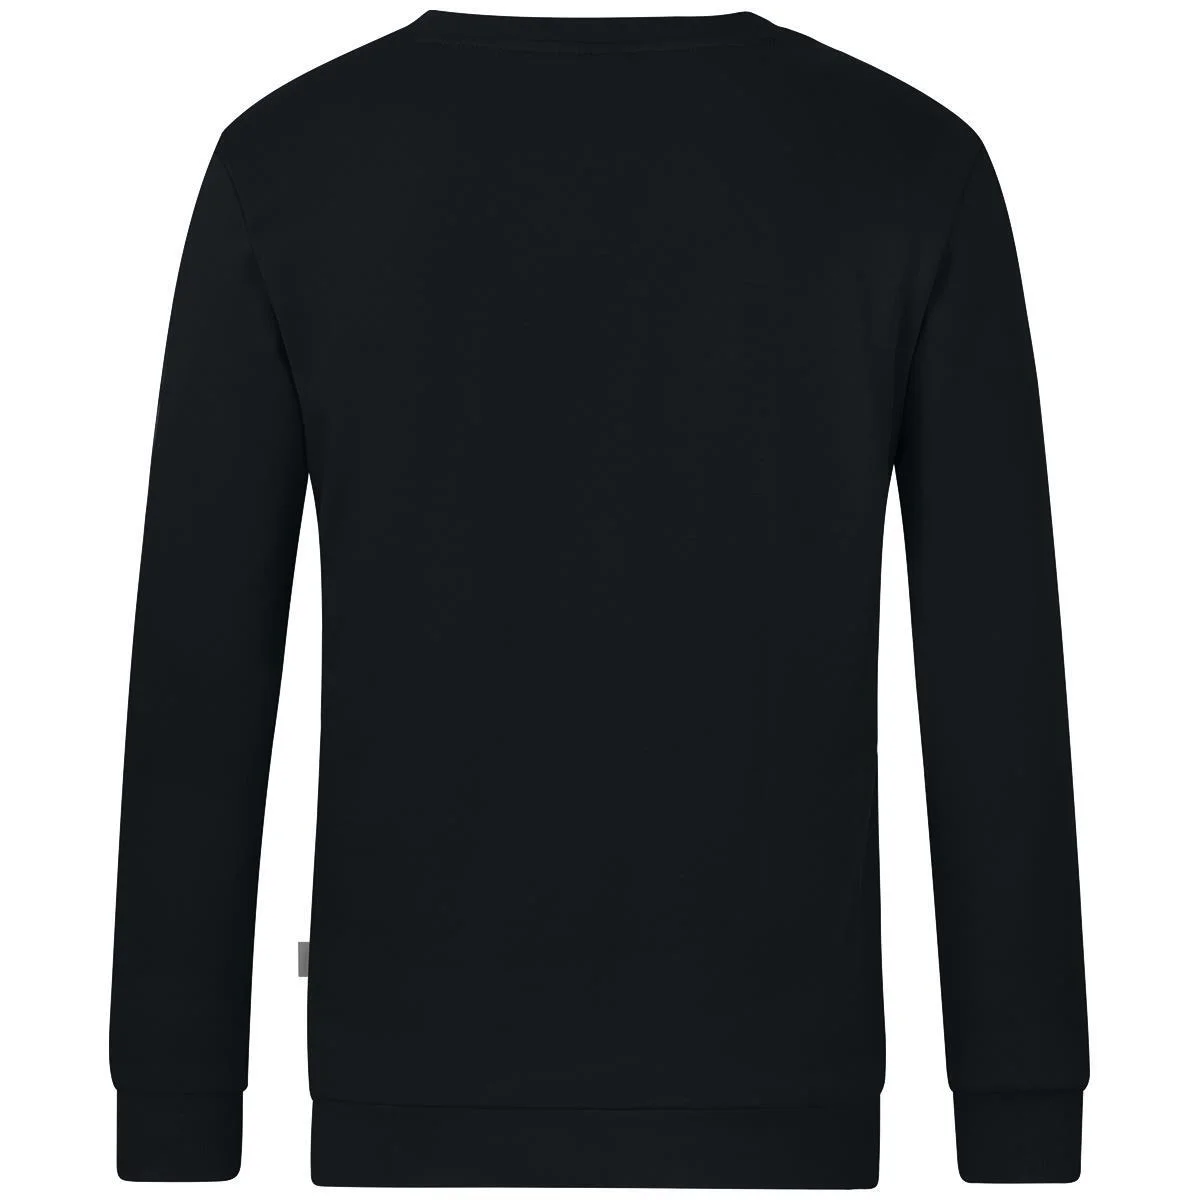 JAKO Sweat-Shirt Organic, schwarz, Gr.S